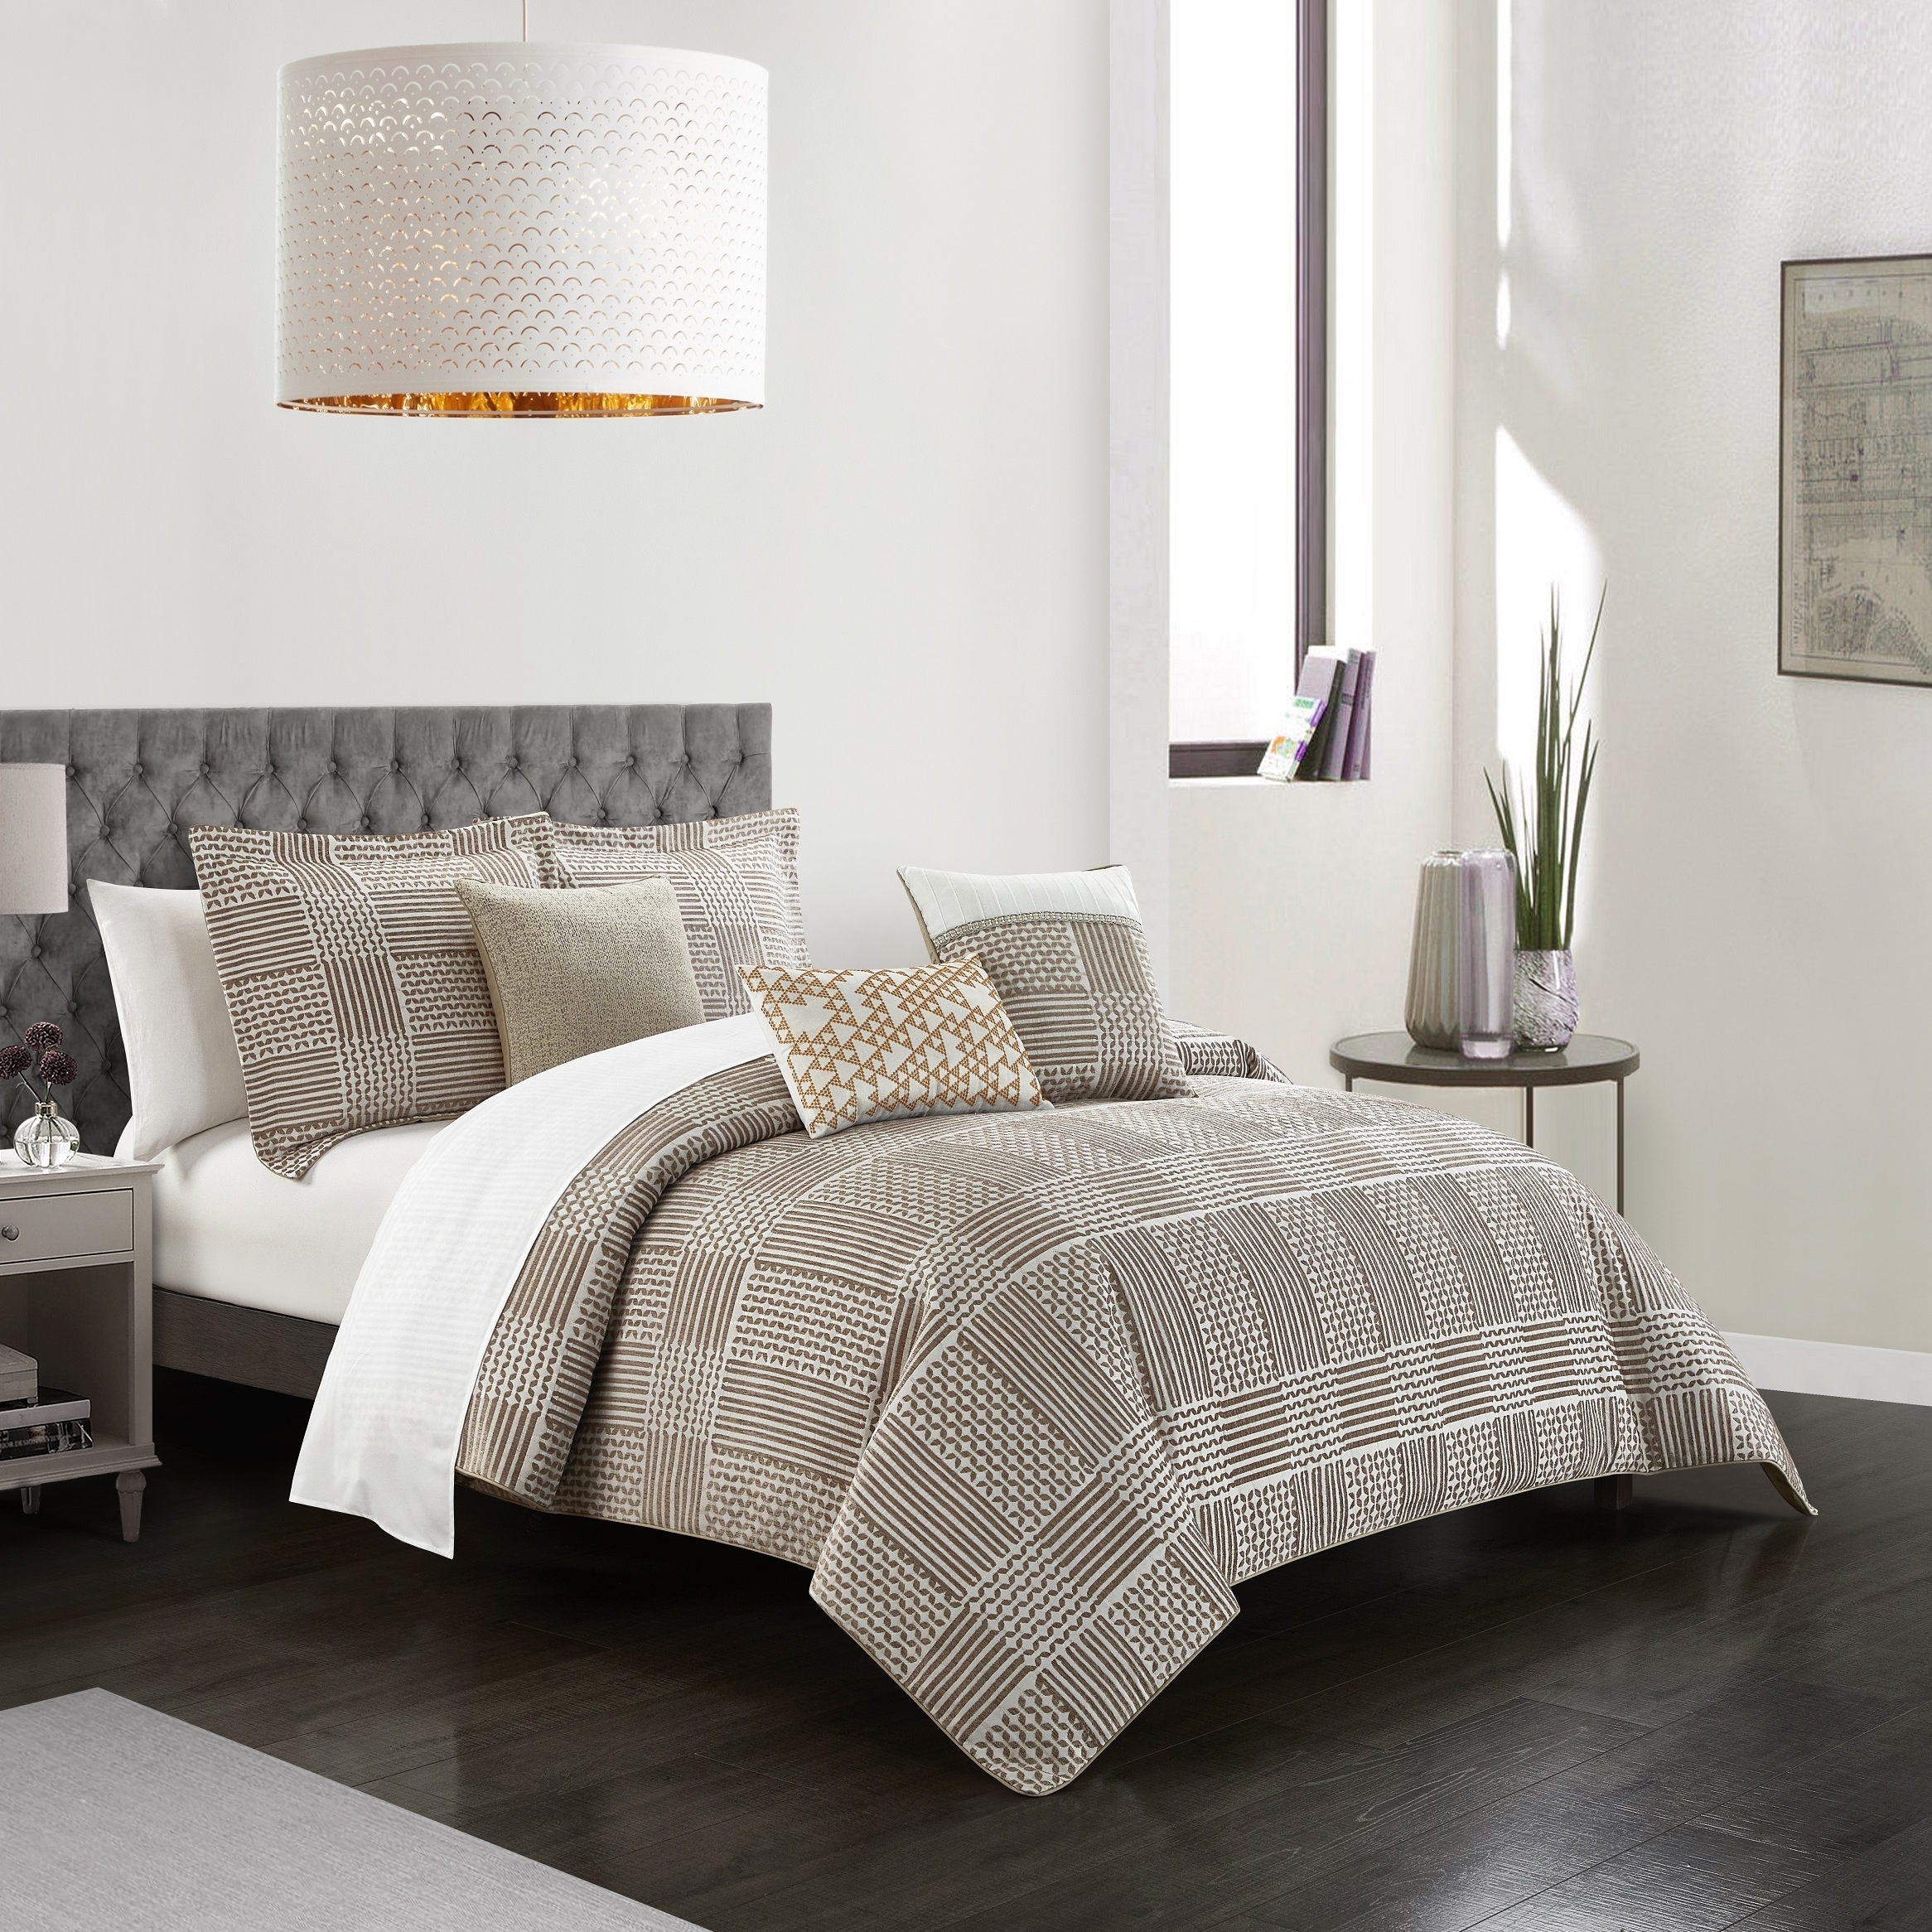 Odhi 6 Or 10 Piece Comforter Set Chenille Geometric Pattern Design Bedding - Grey, Queen